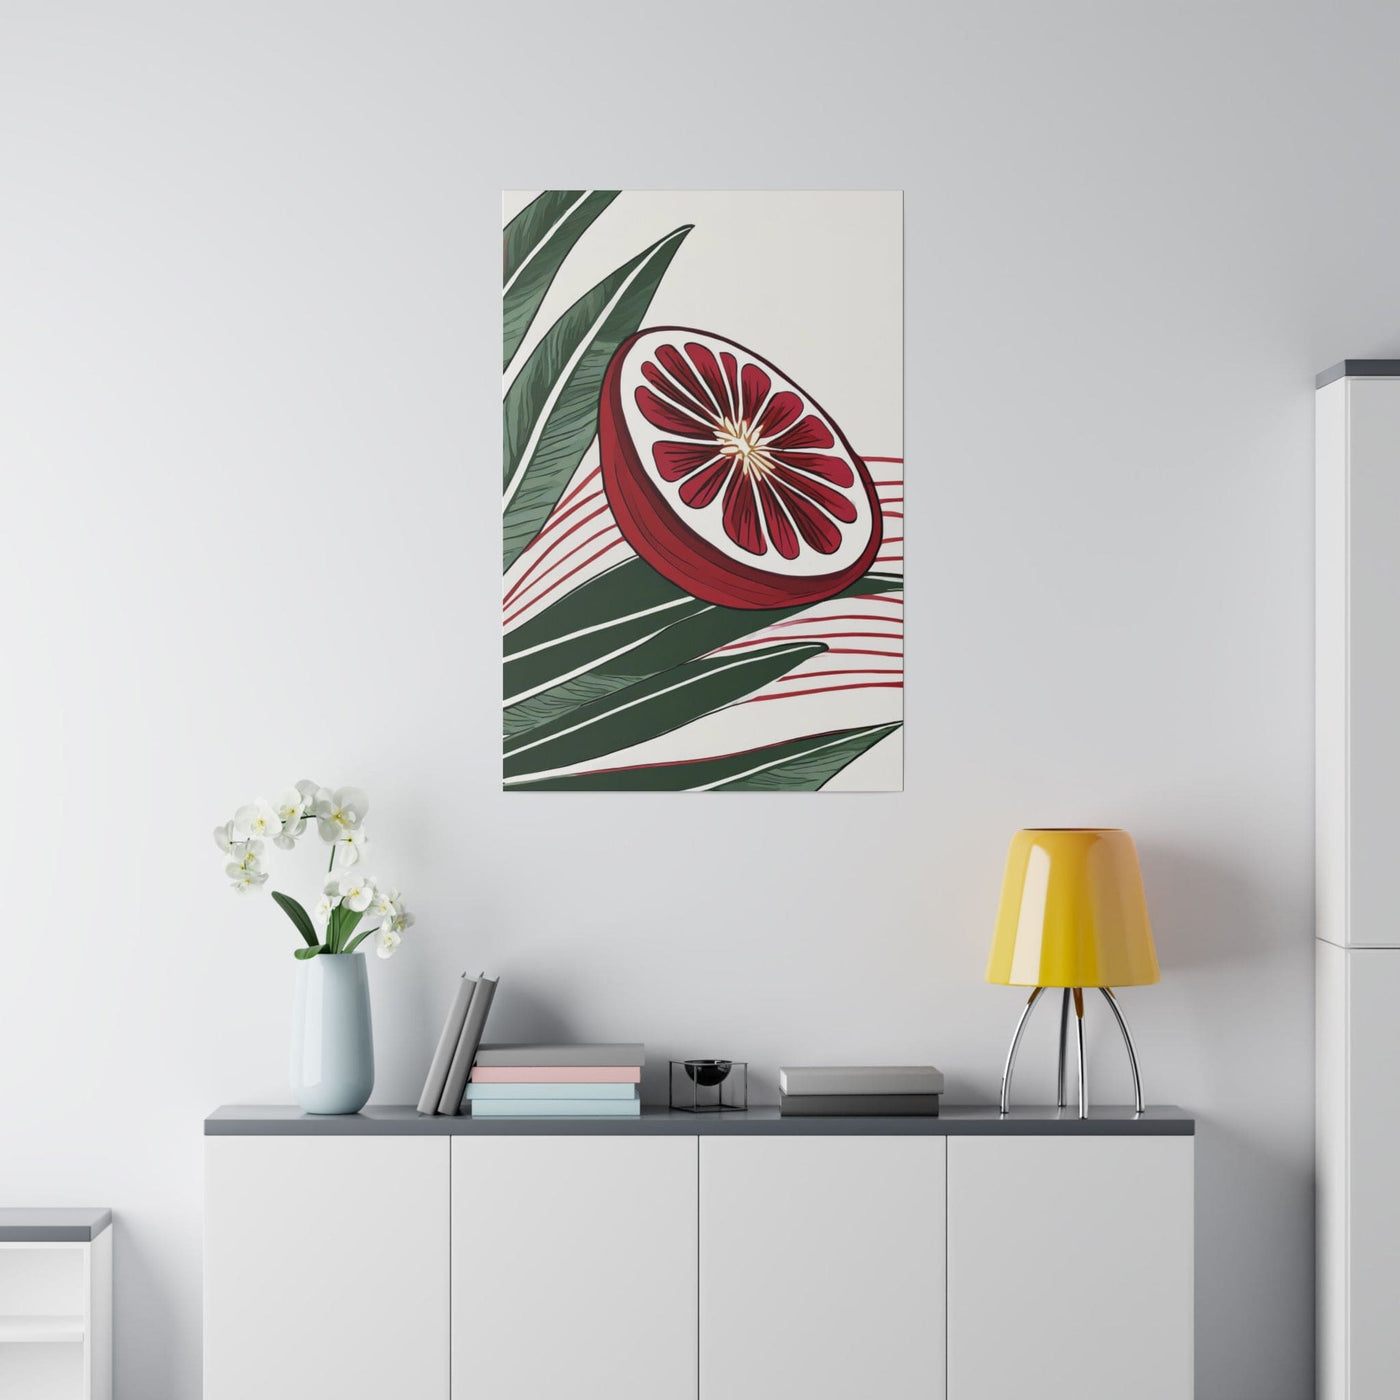 Fine Wall Art Print Home Office Decor Floral Line 8332 - Canvas